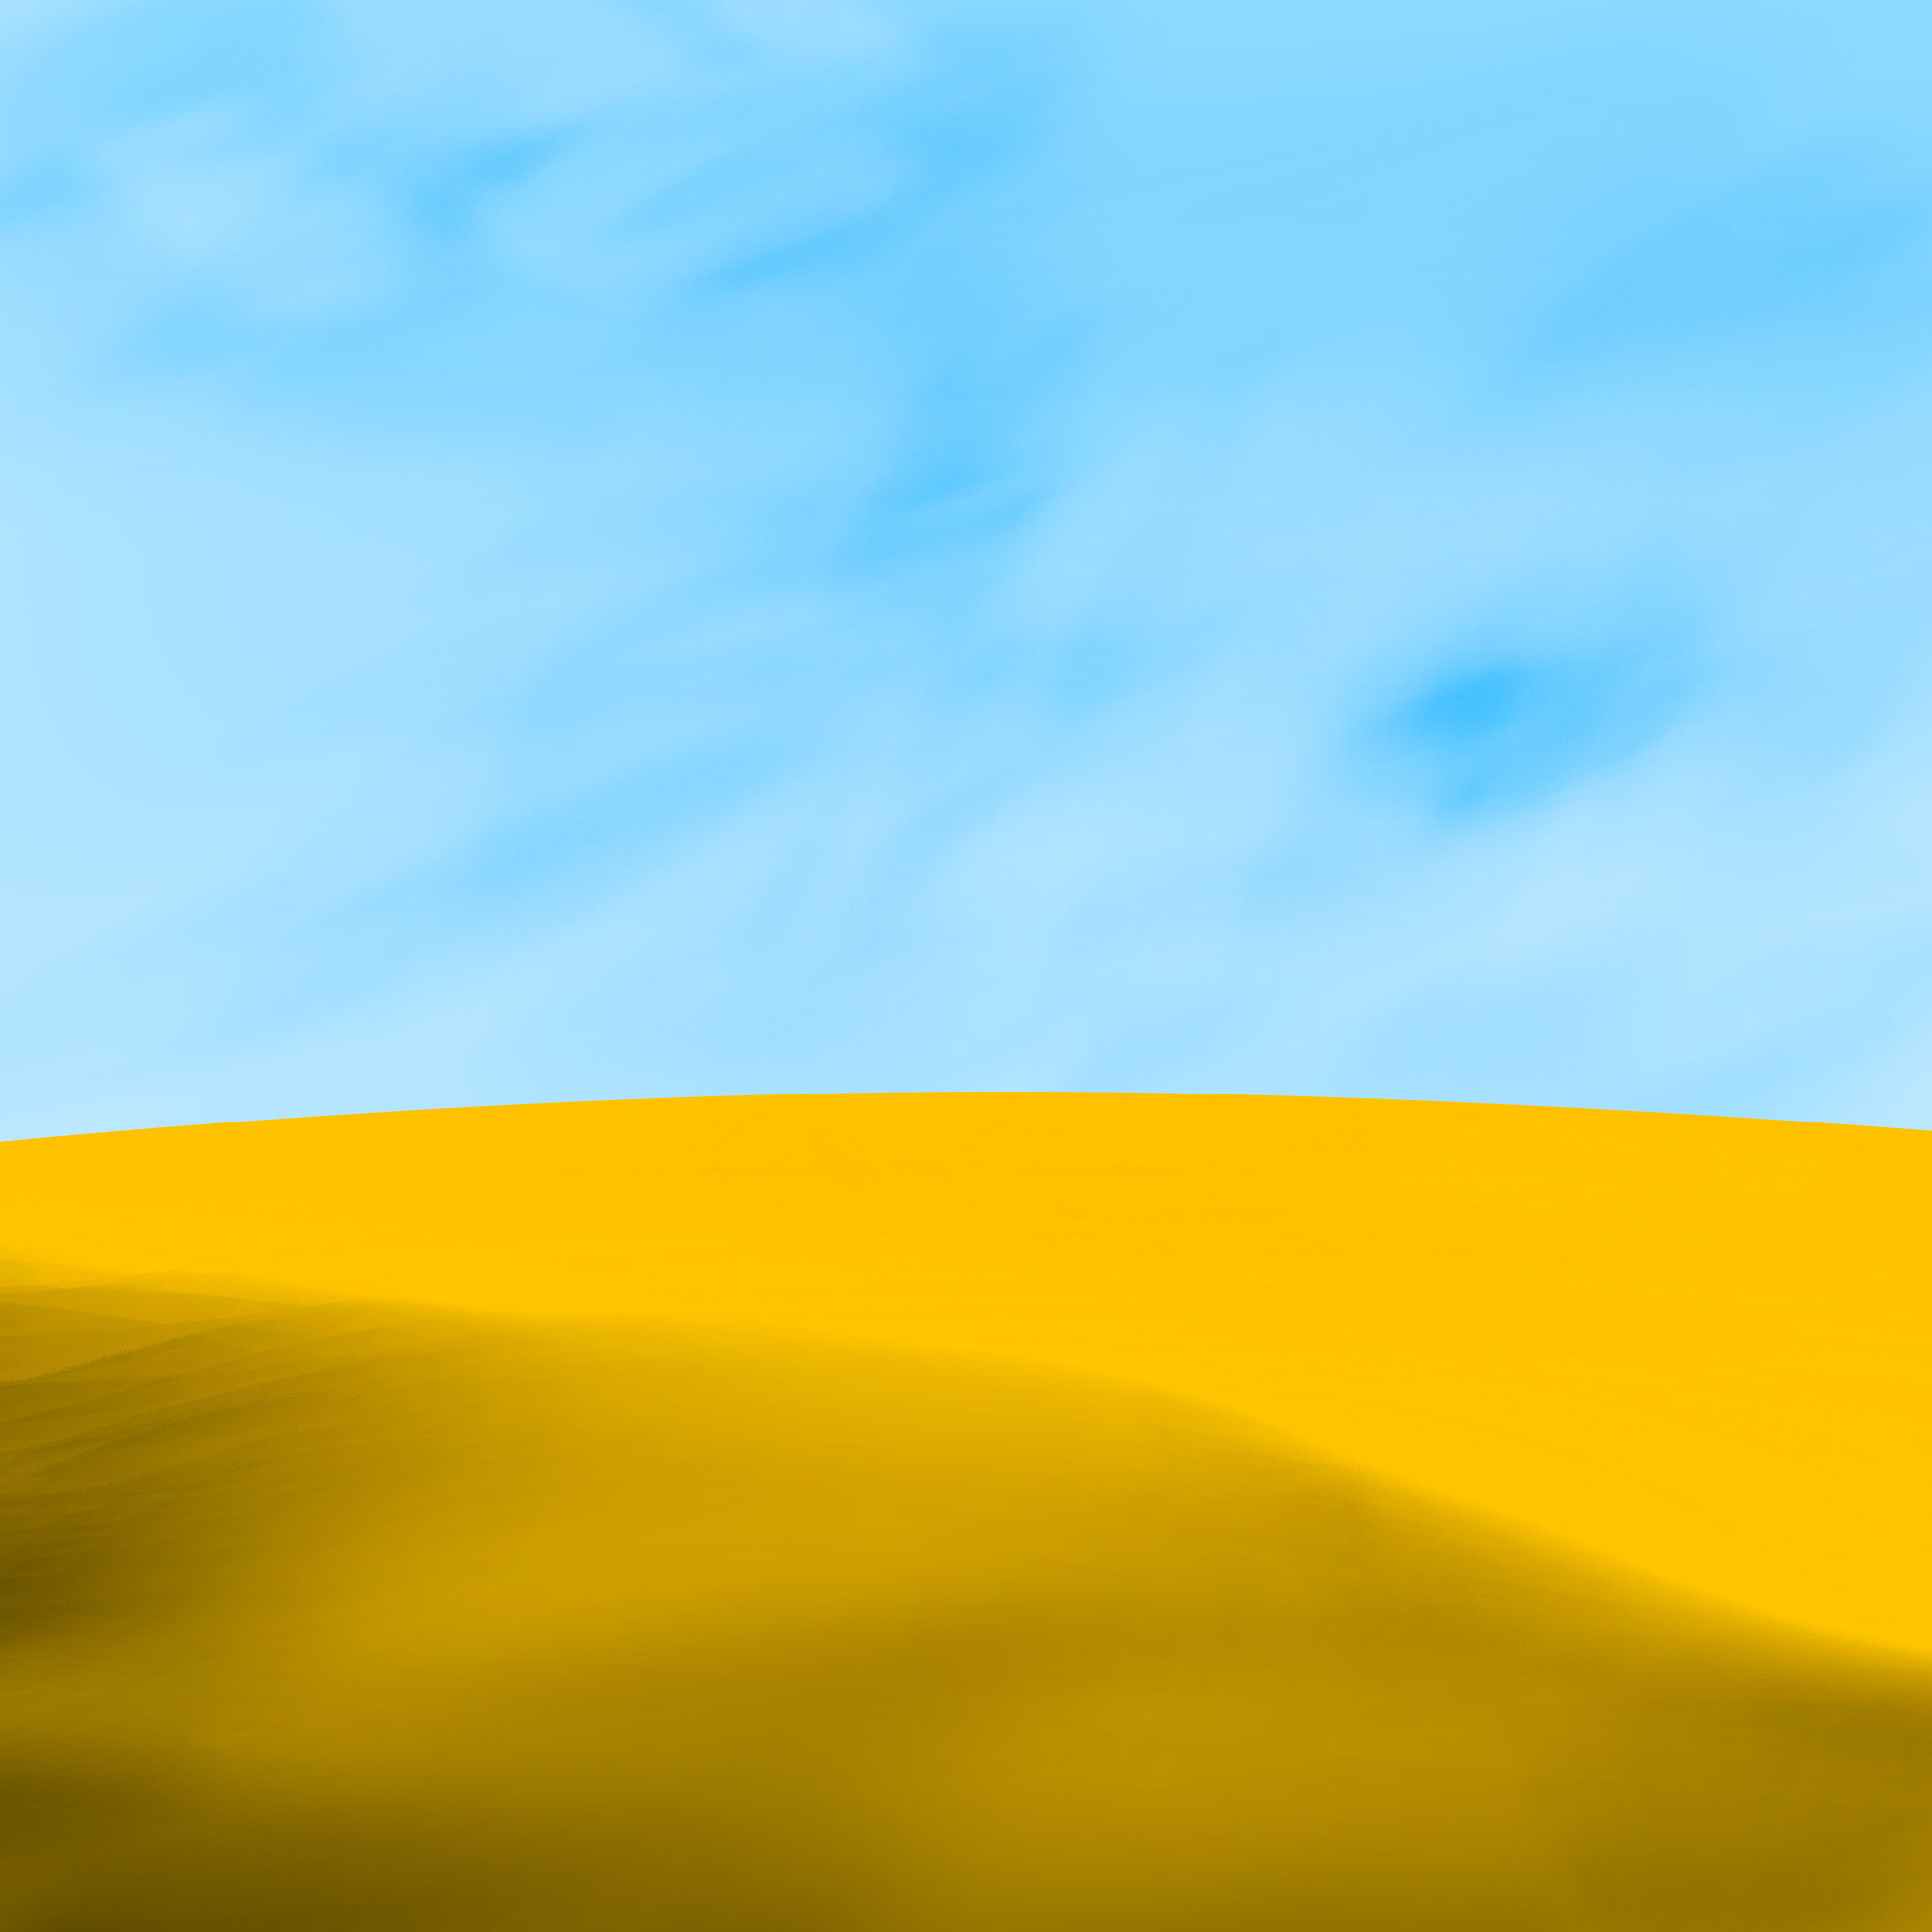 Desert Yellow Sky Blue Dunes 2000x2000